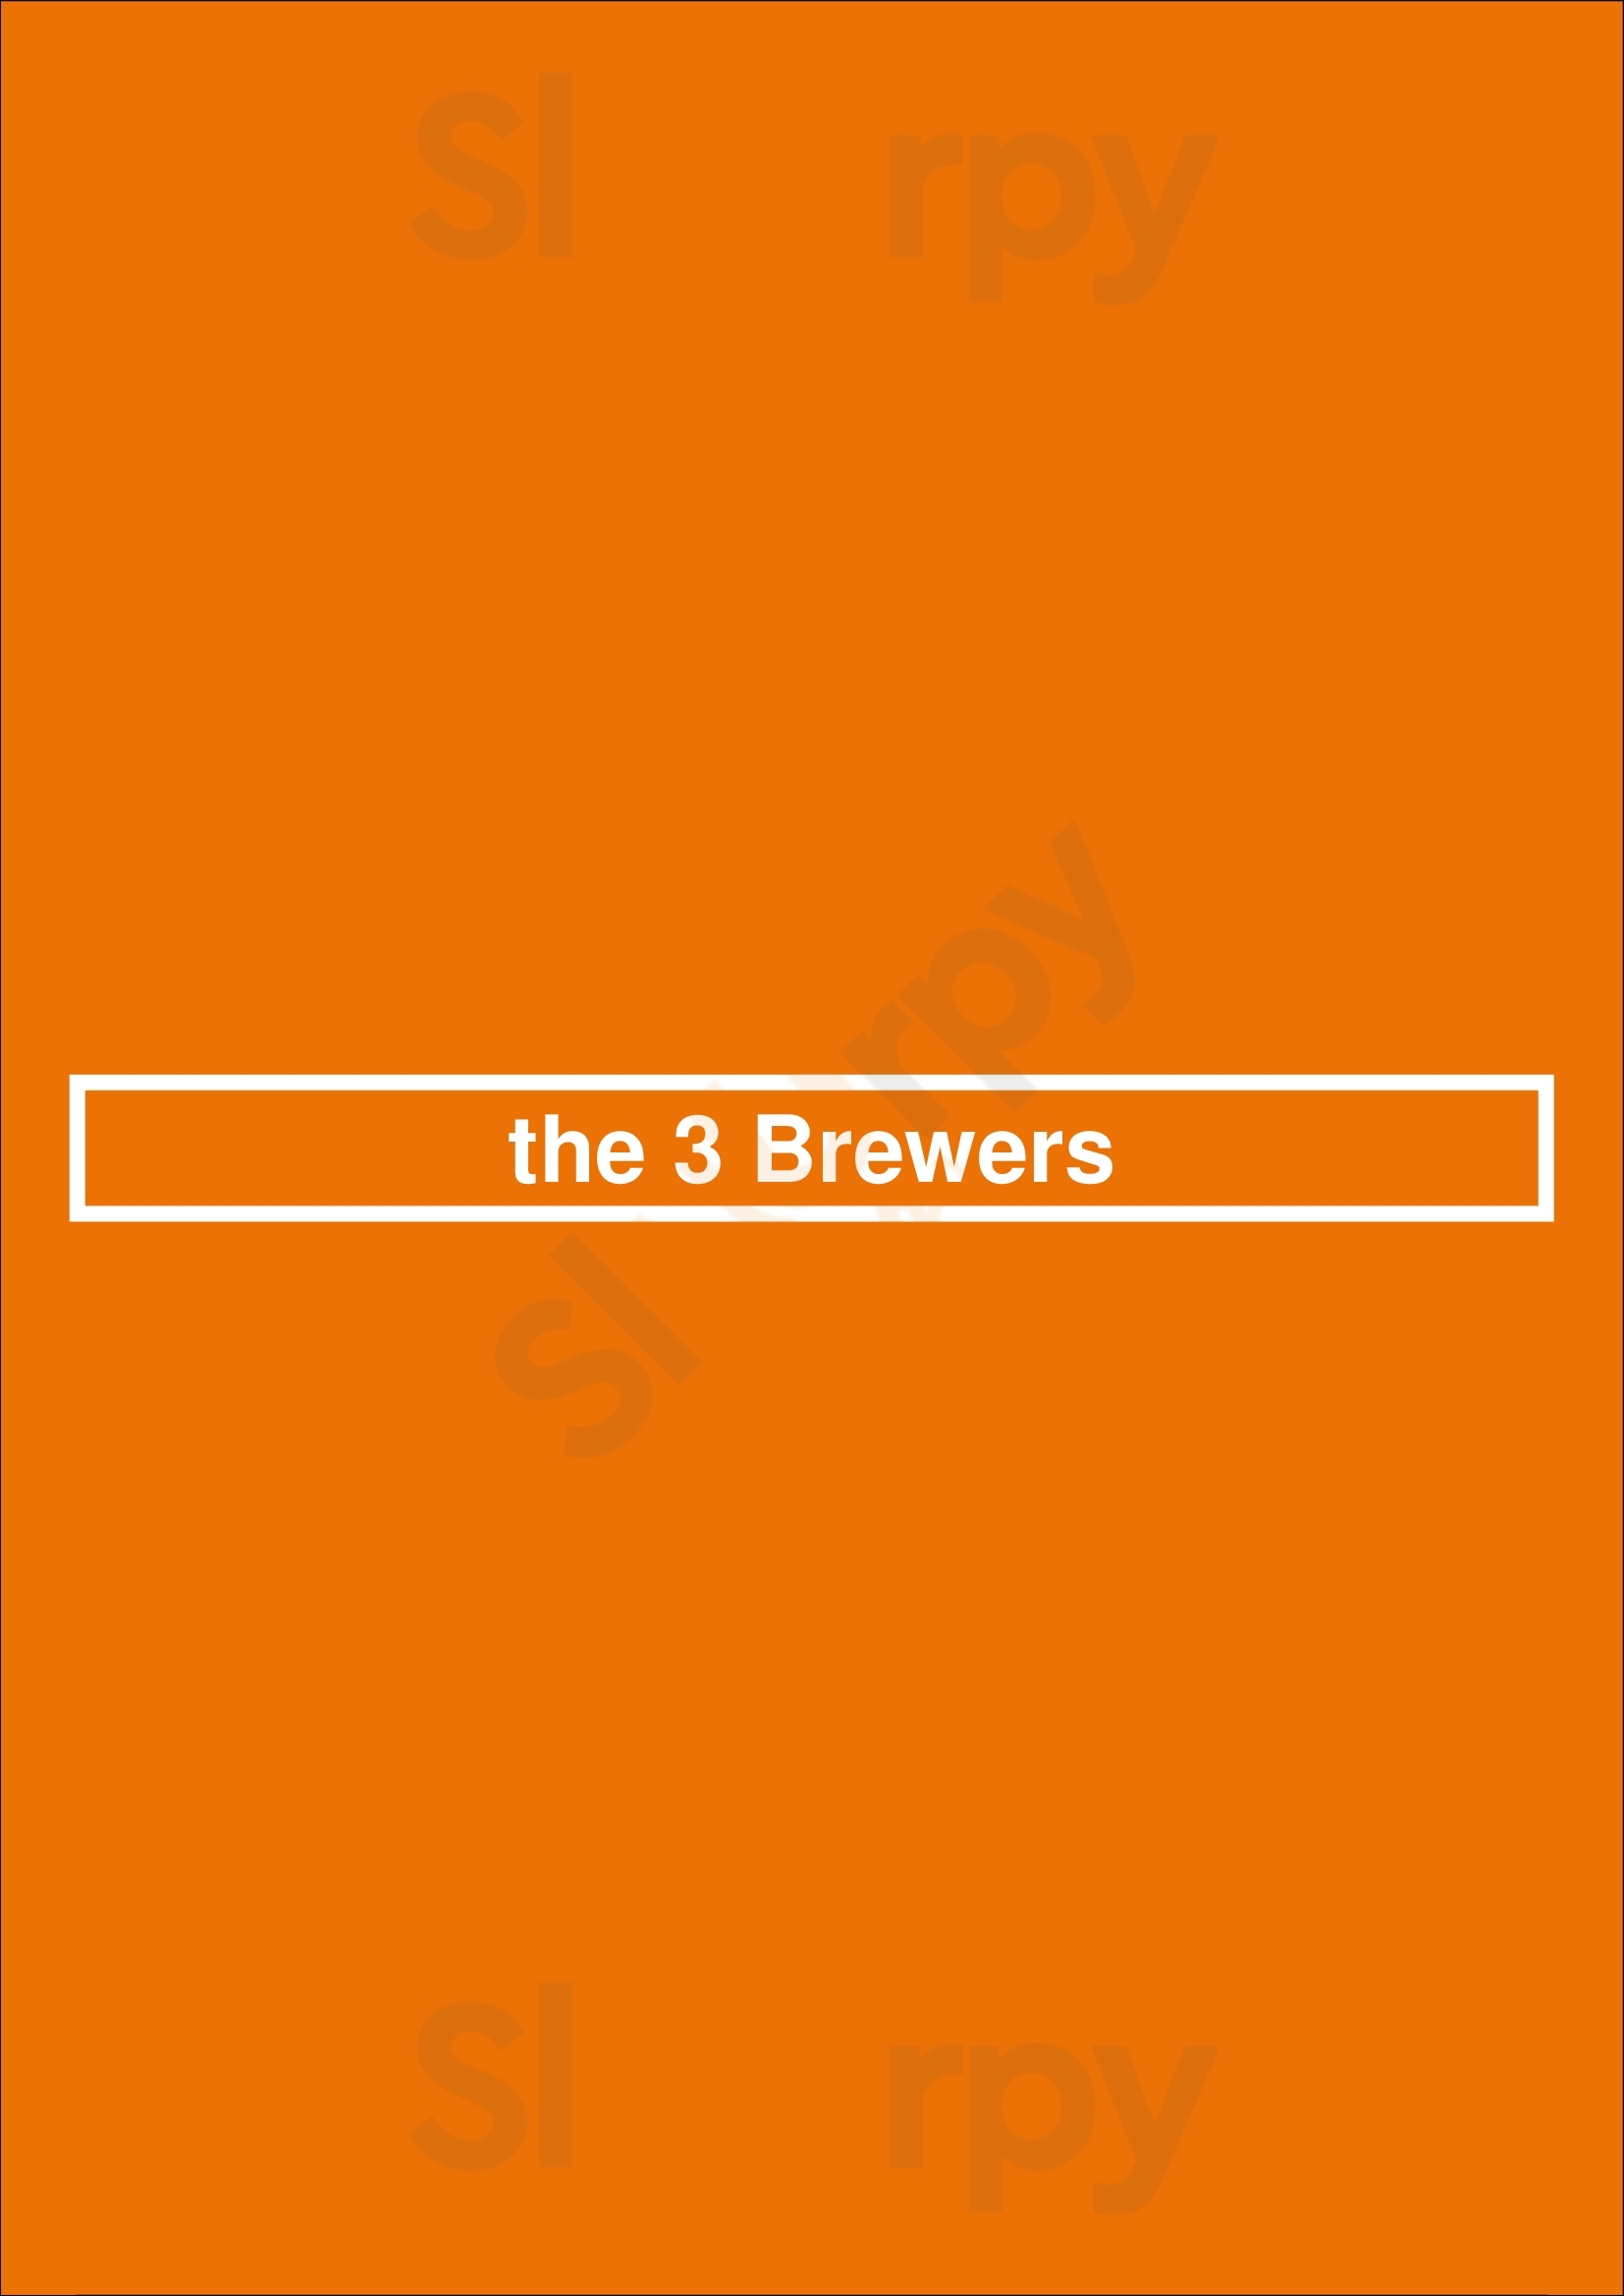 The 3 Brewers Ottawa Menu - 1